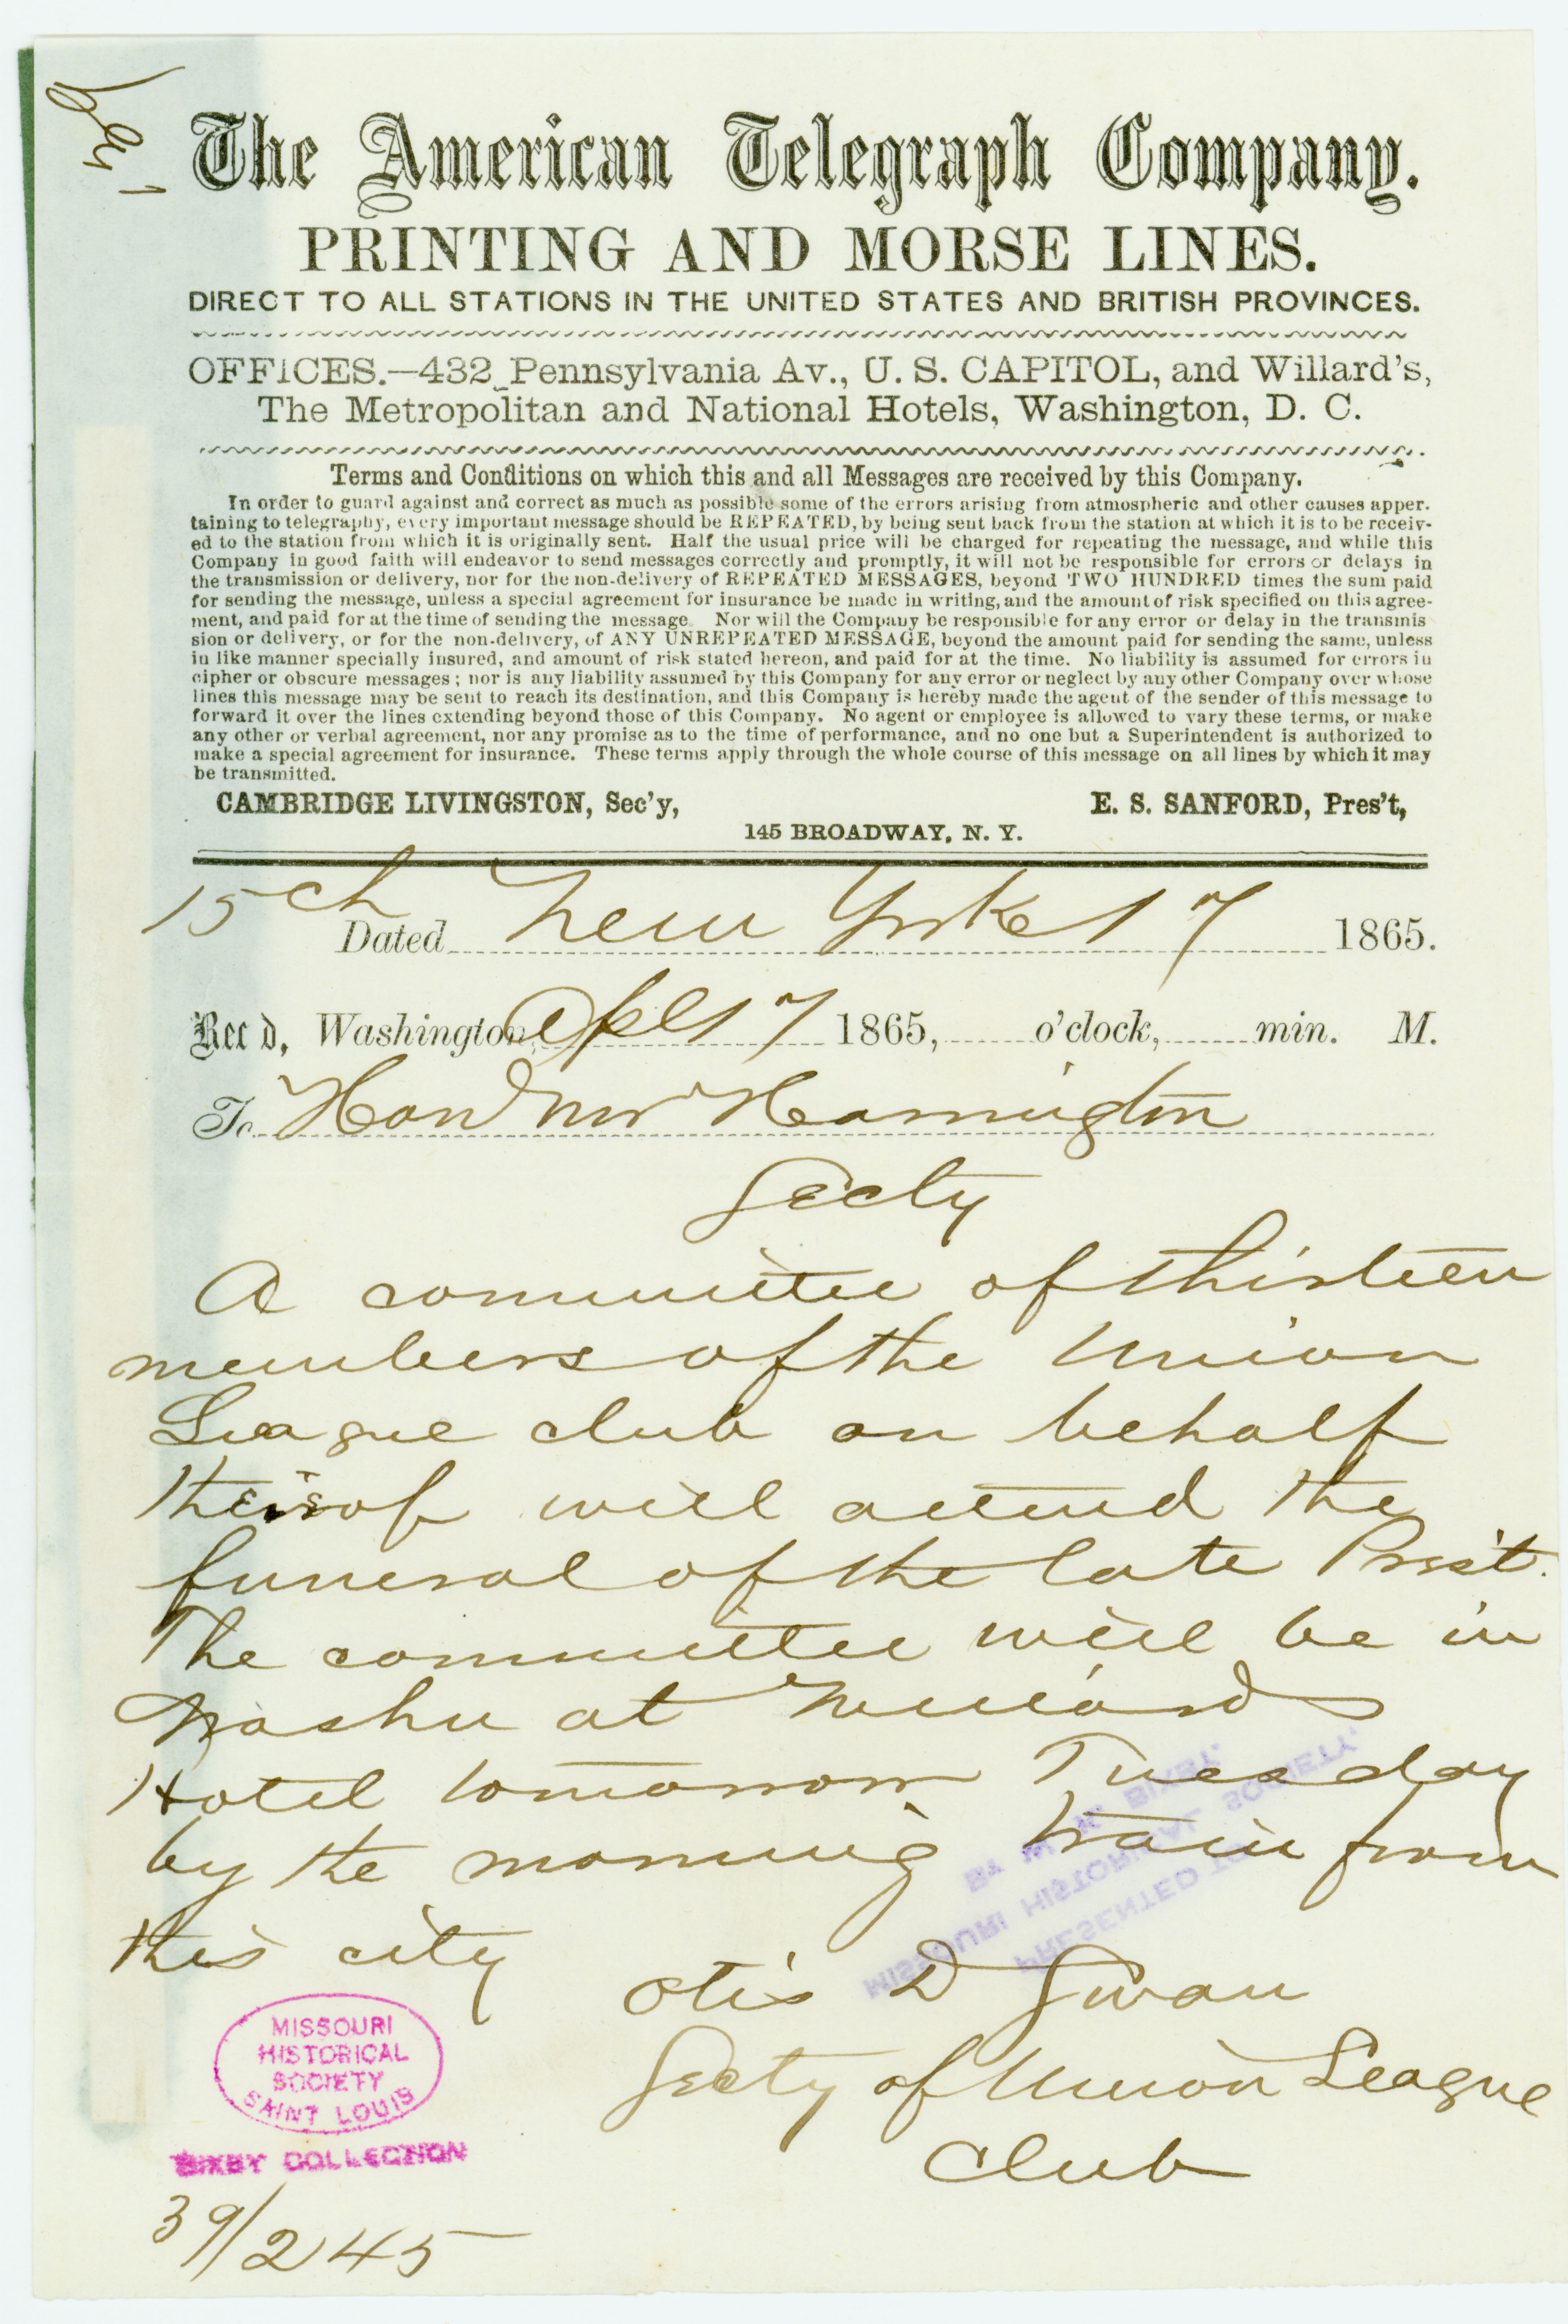 American Telegraph Company telegram of Otis D. Swan, Secty. of Union League Club, New York, to Hon. Mr. Harrington, April 17, 1865